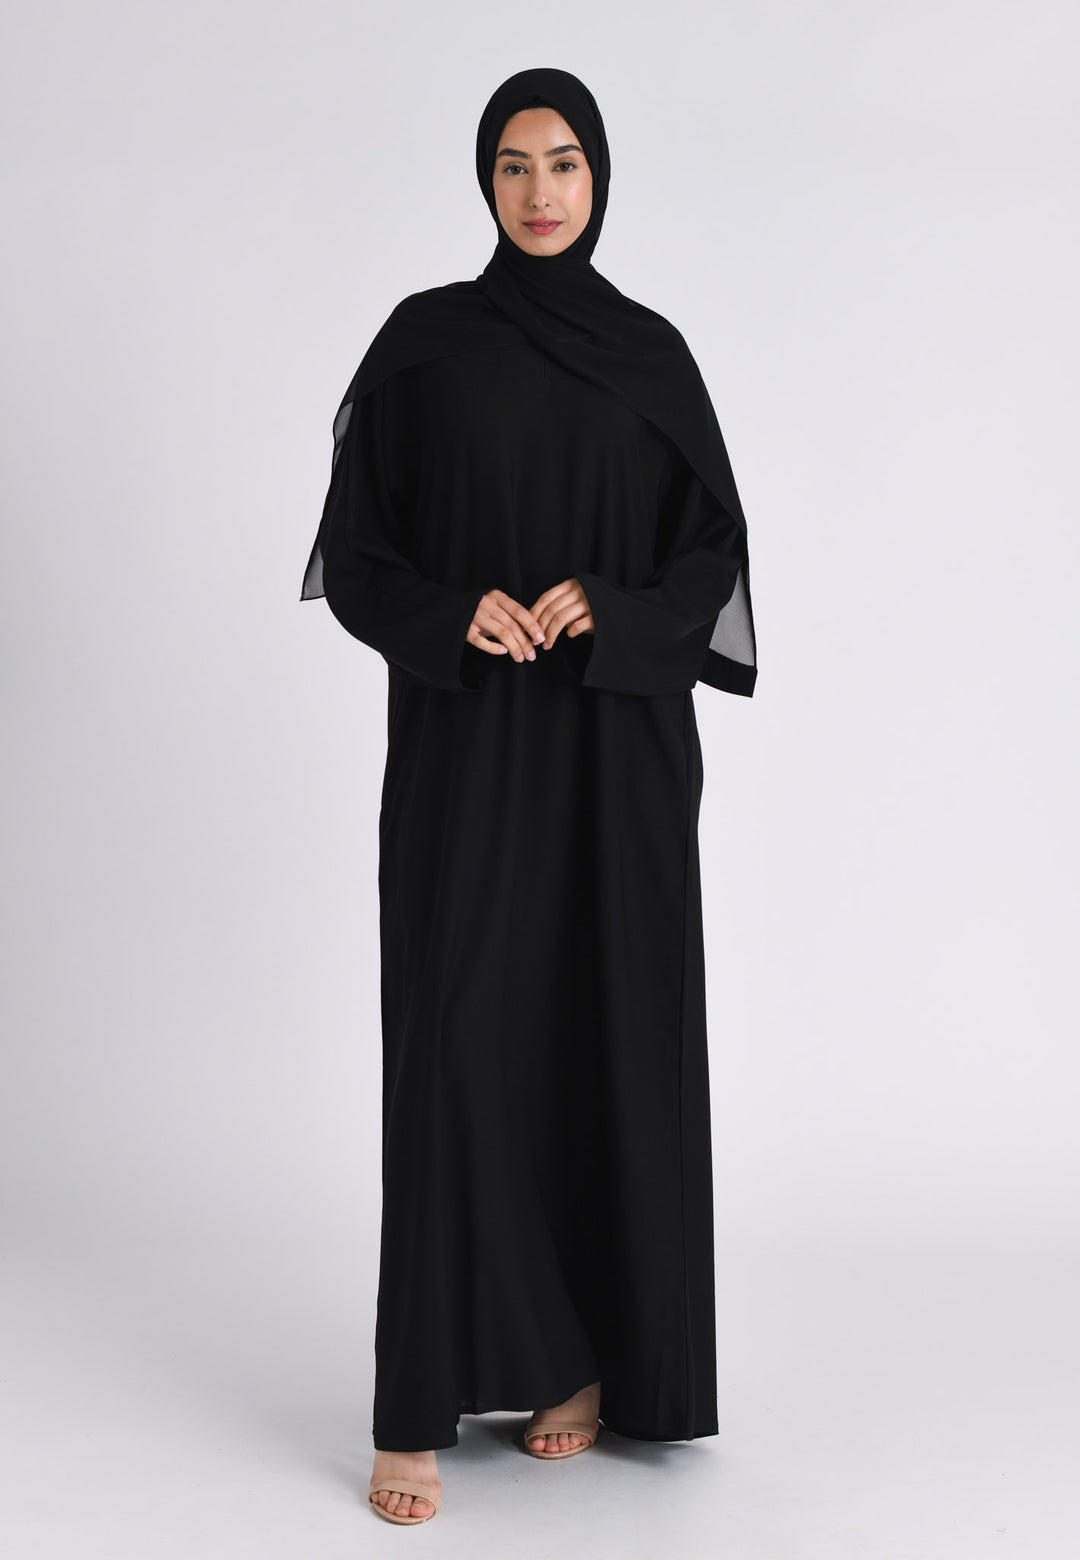 Plain Black Abaya with Zip Pockets